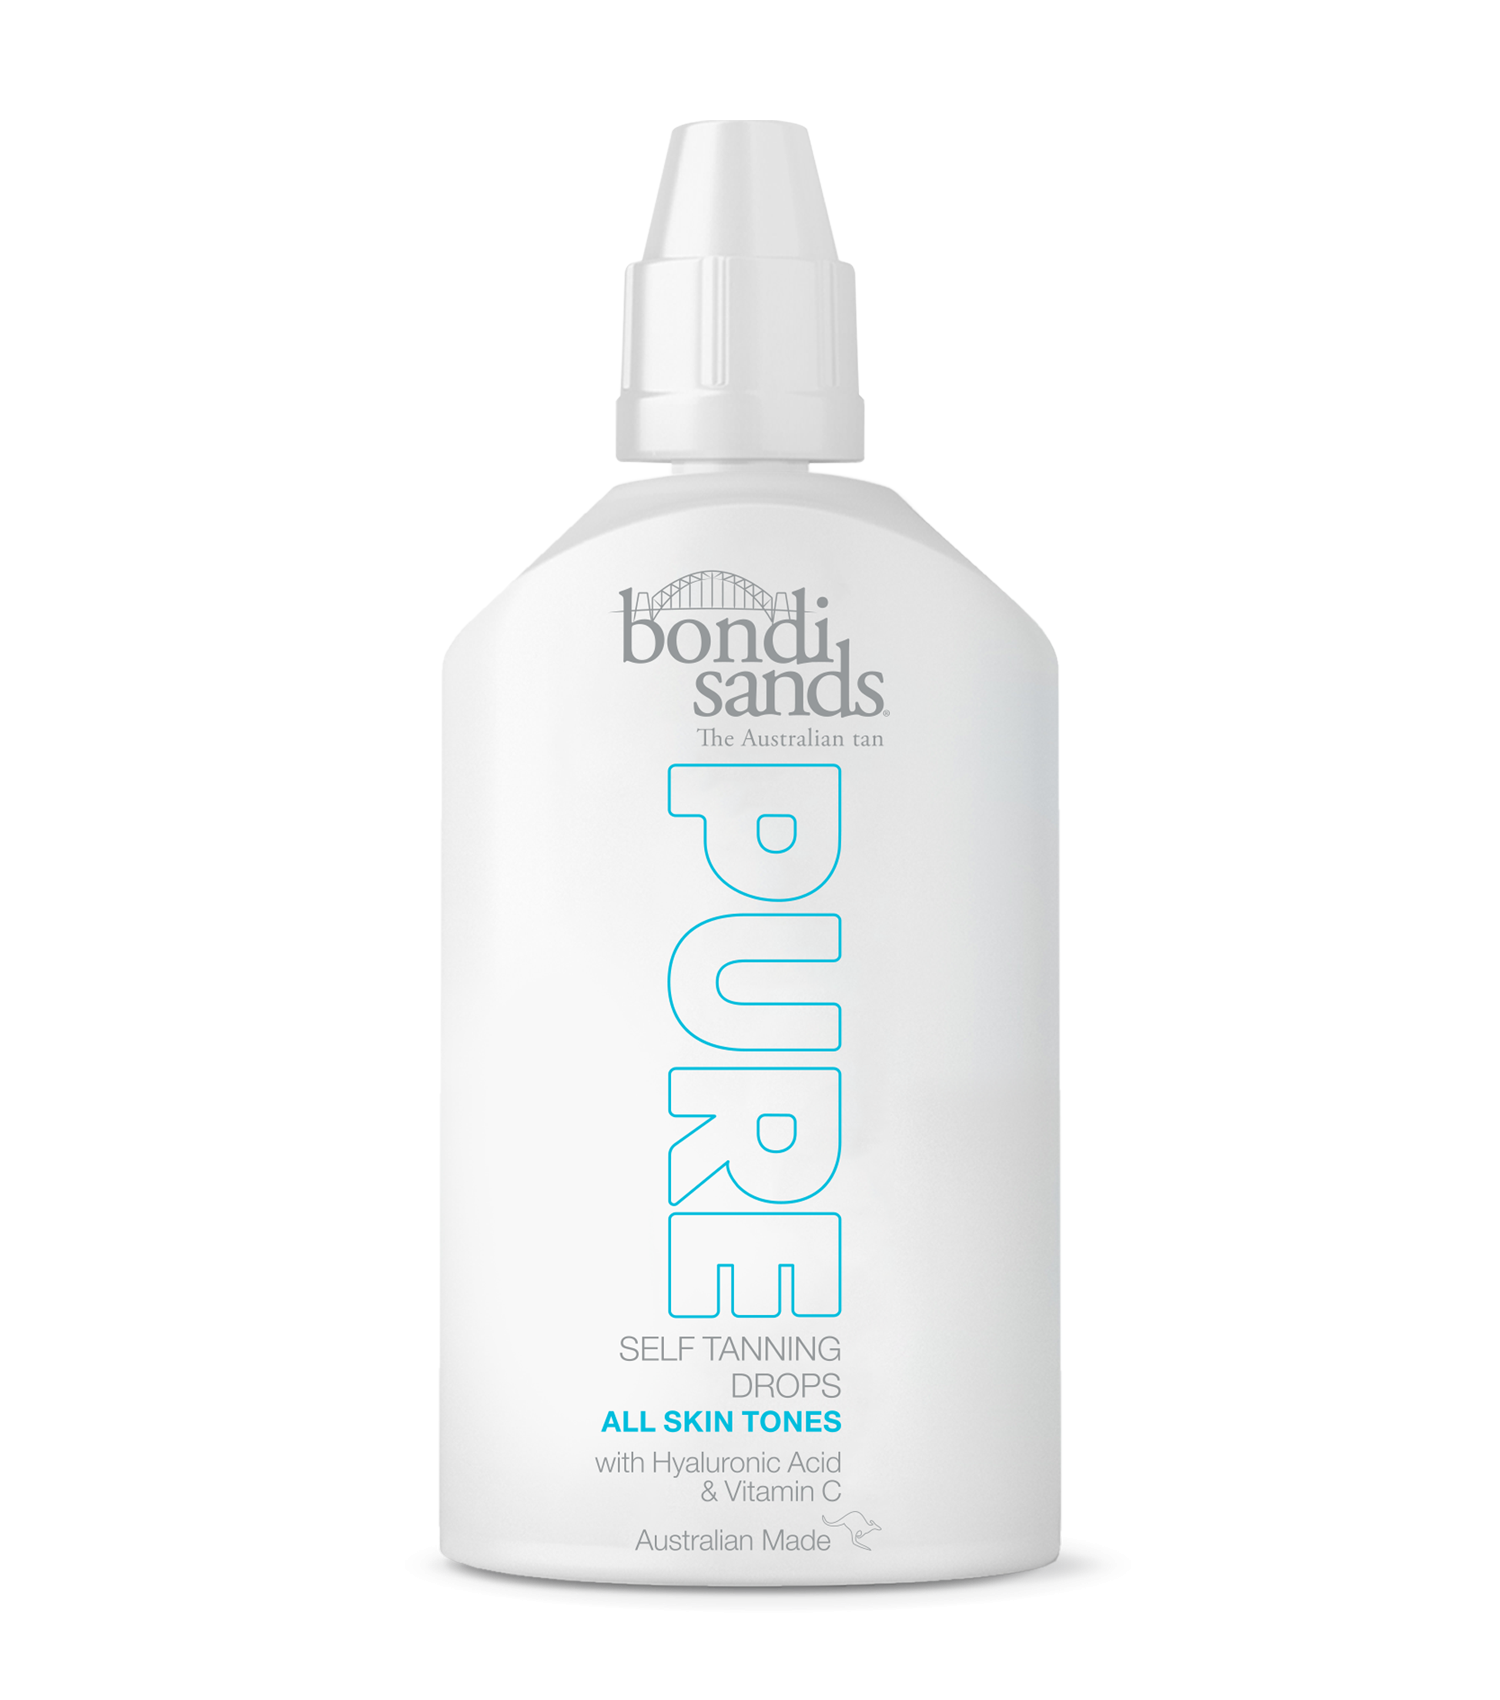 Bondi Sands Pure Self Tanning Drops Pure Self Tanning Drops - 1.35oz 1